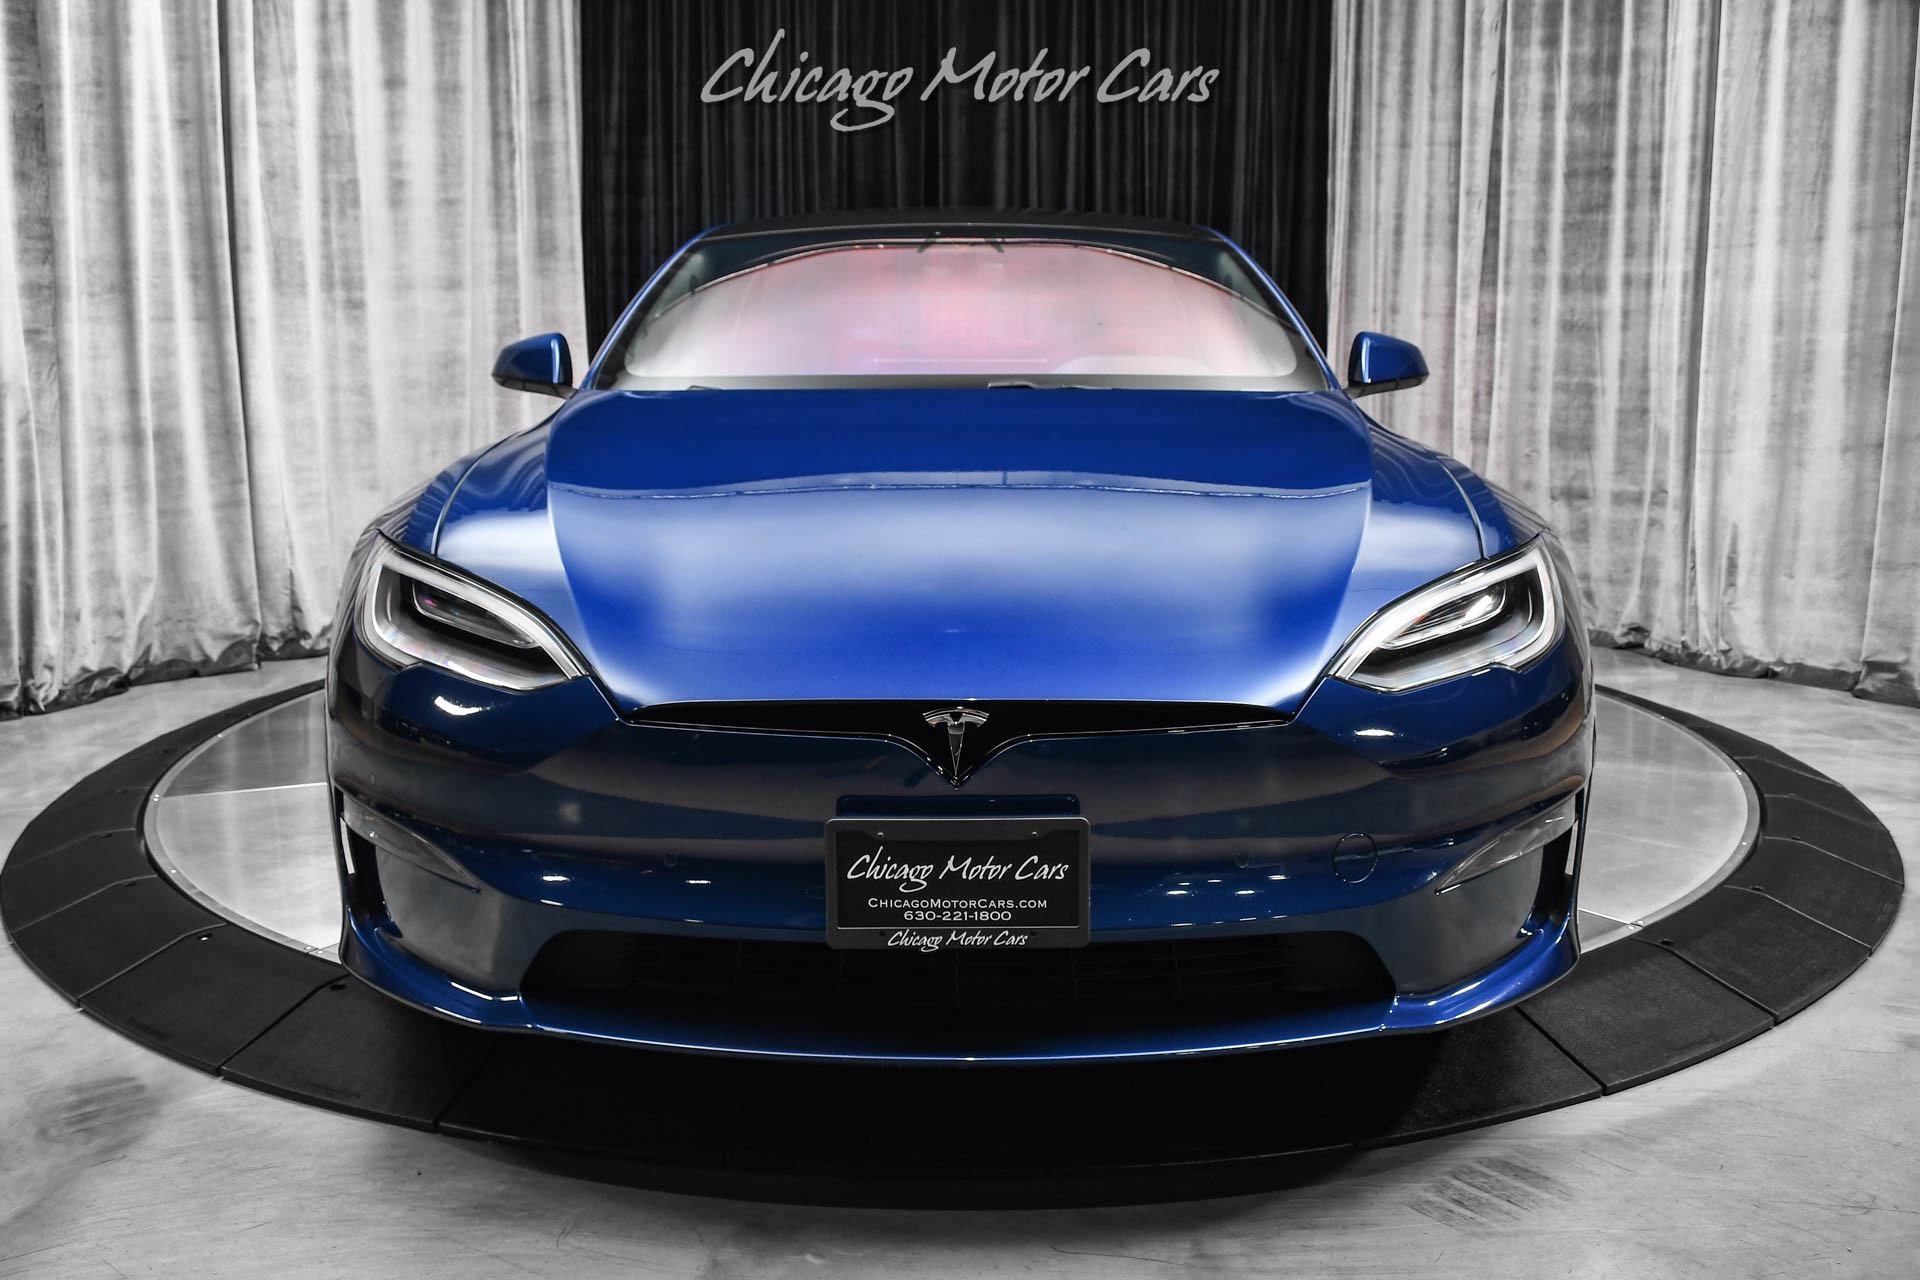 Used-2022-Tesla-Model-S-Plaid-Sedan-Full-Self-Driving-Capability-21-Arachnid-Wheels-1000HP